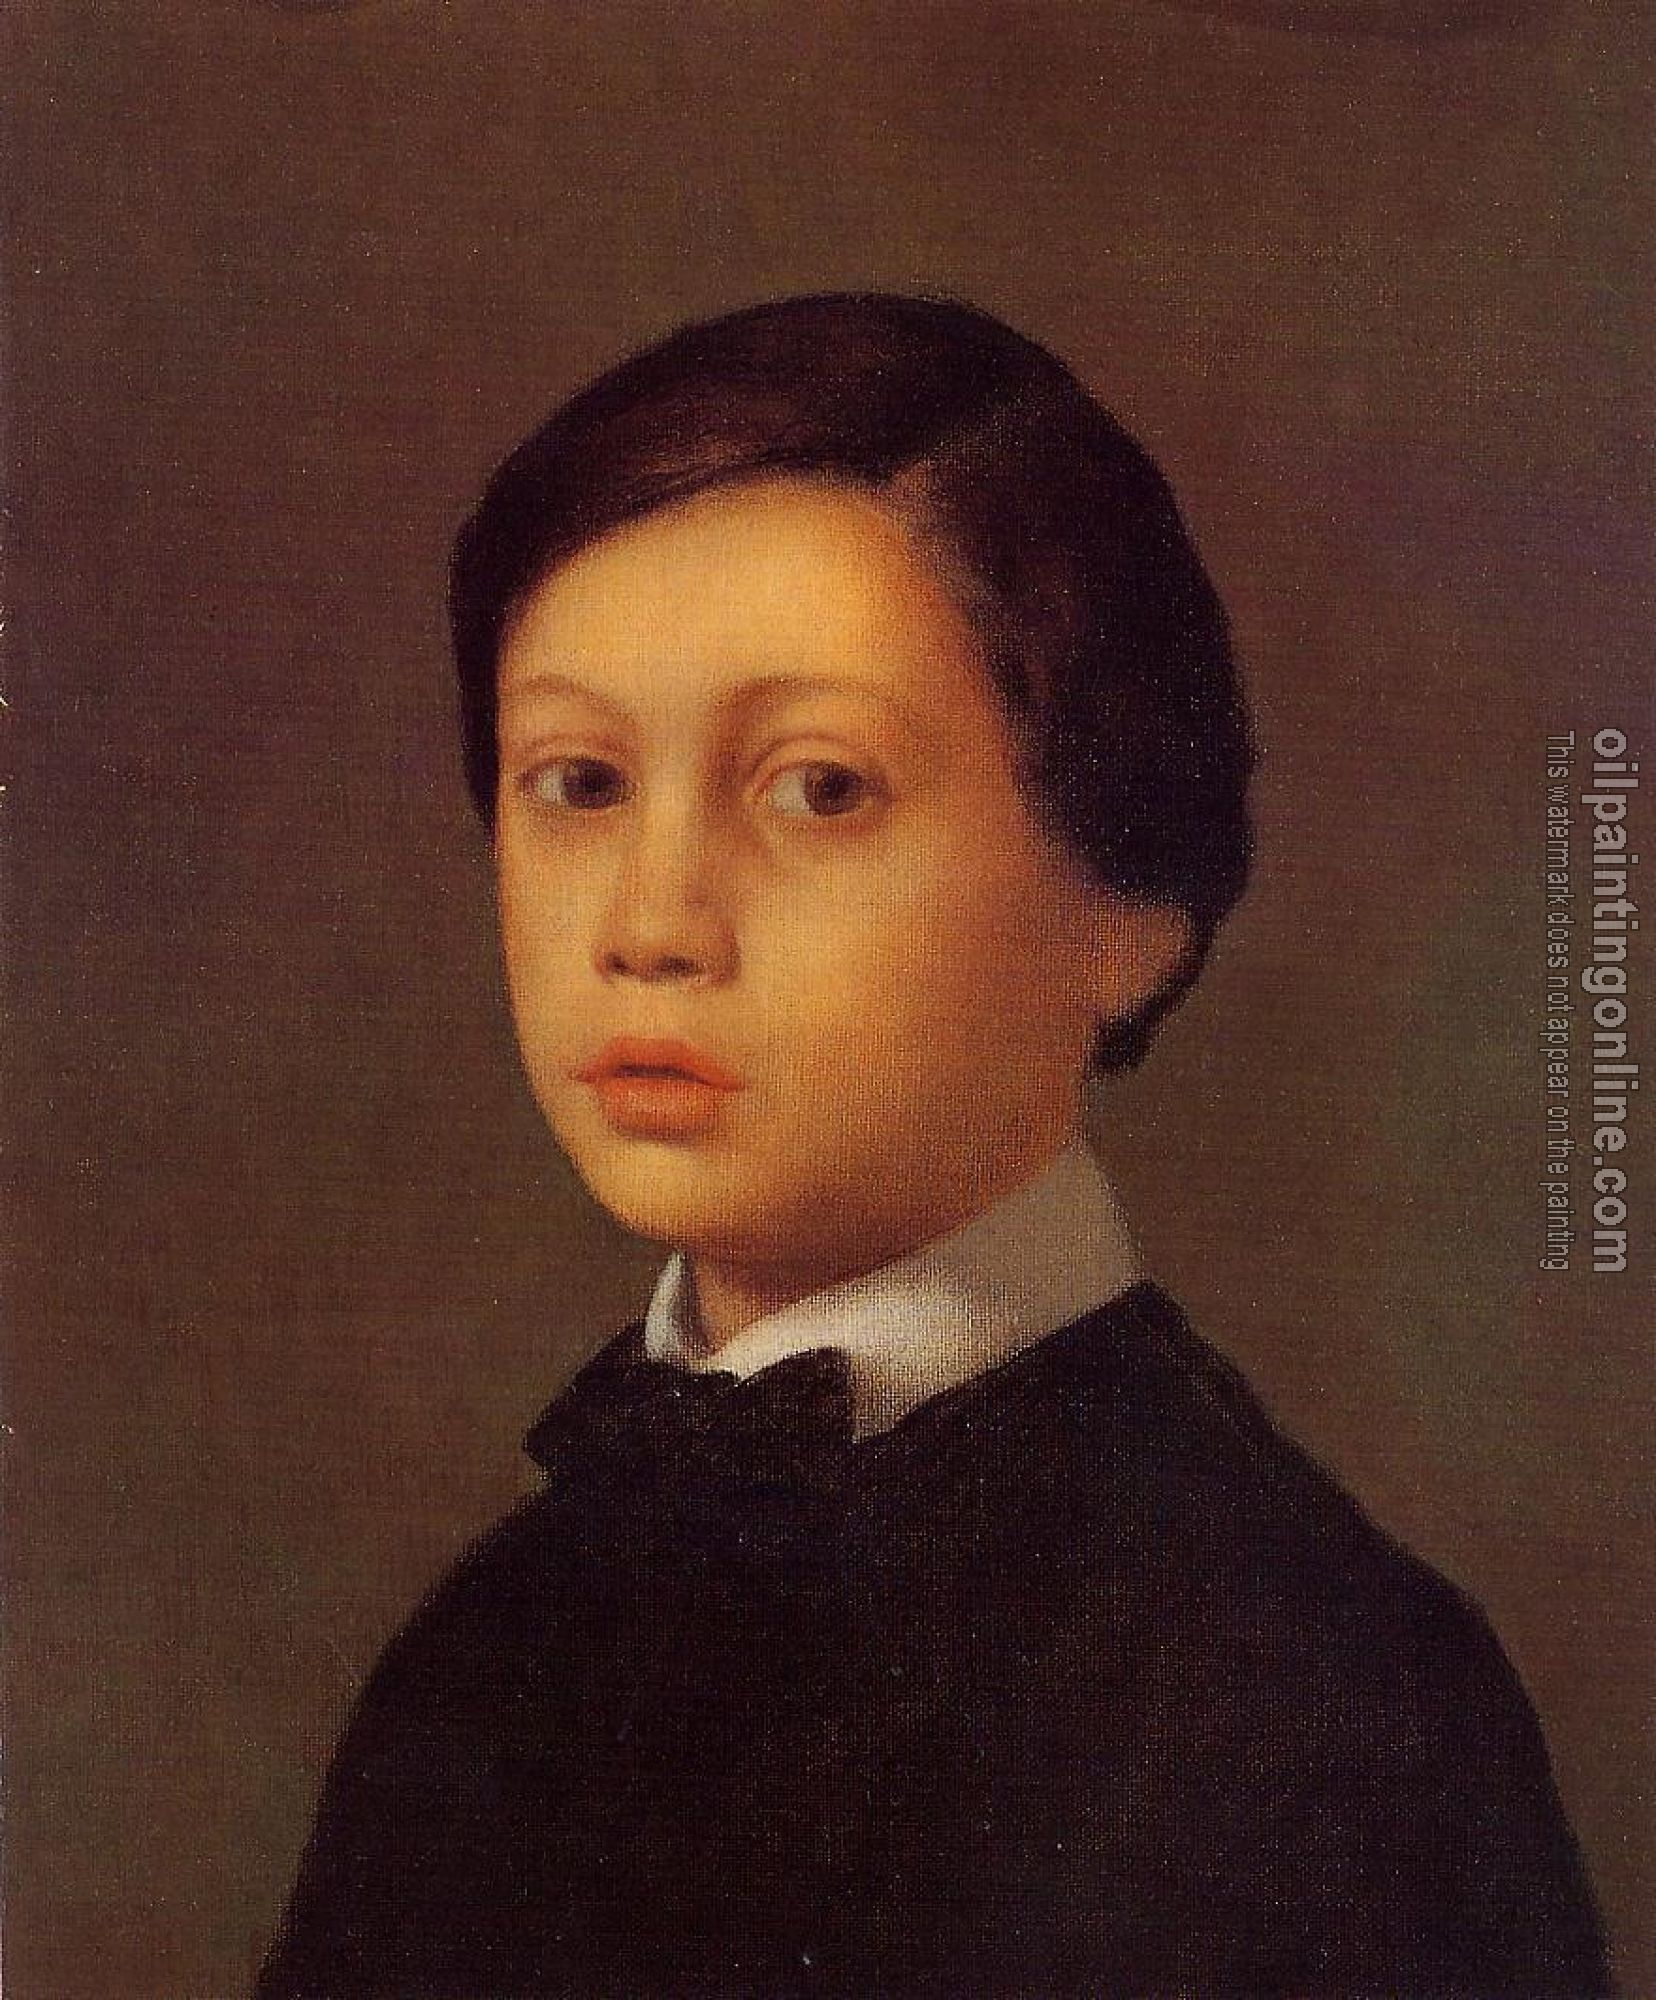 Degas, Edgar - Portrait of Rene De Gas, The Artist Brother